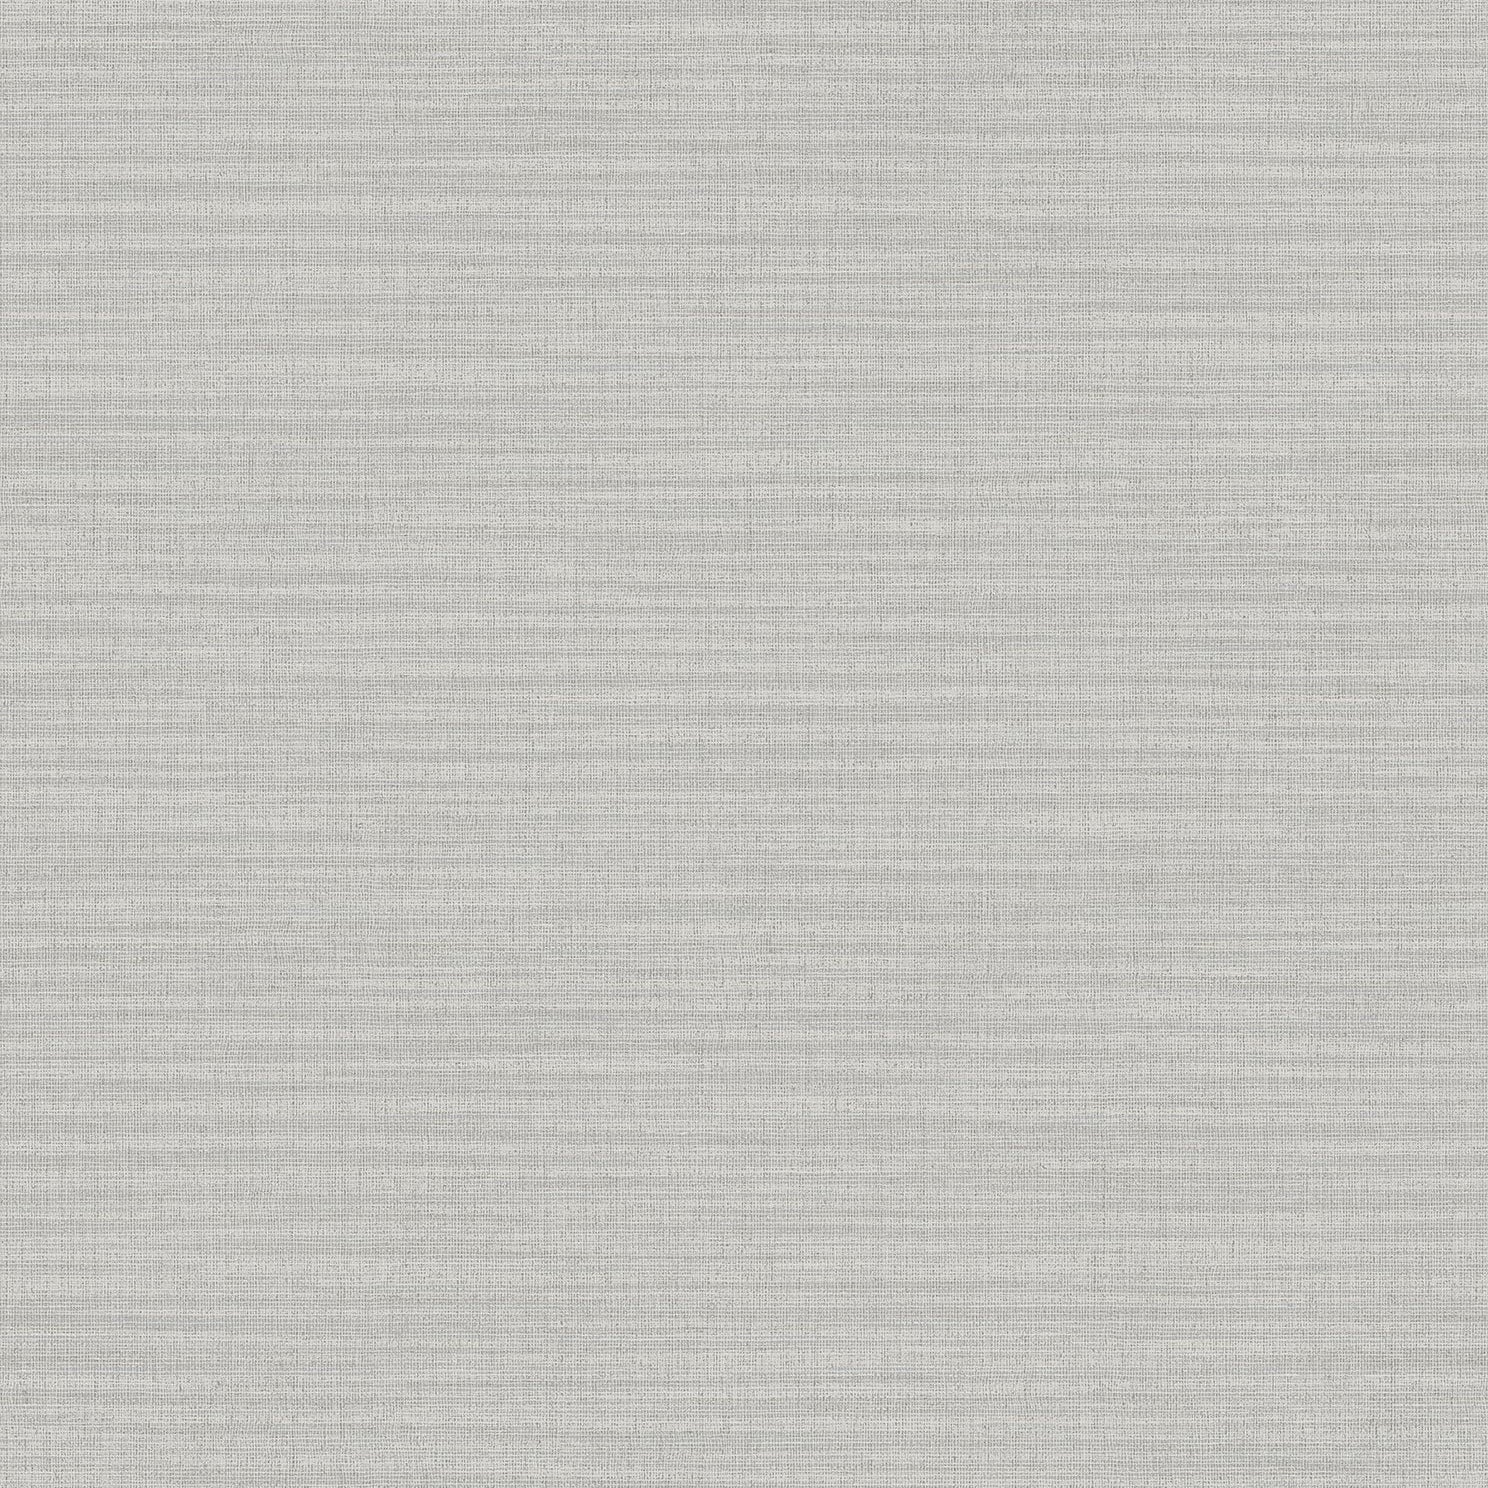 Shop 2836-MKE-3110 Shades of Grey Greys Fabric Textures Wallpaper by Advantage